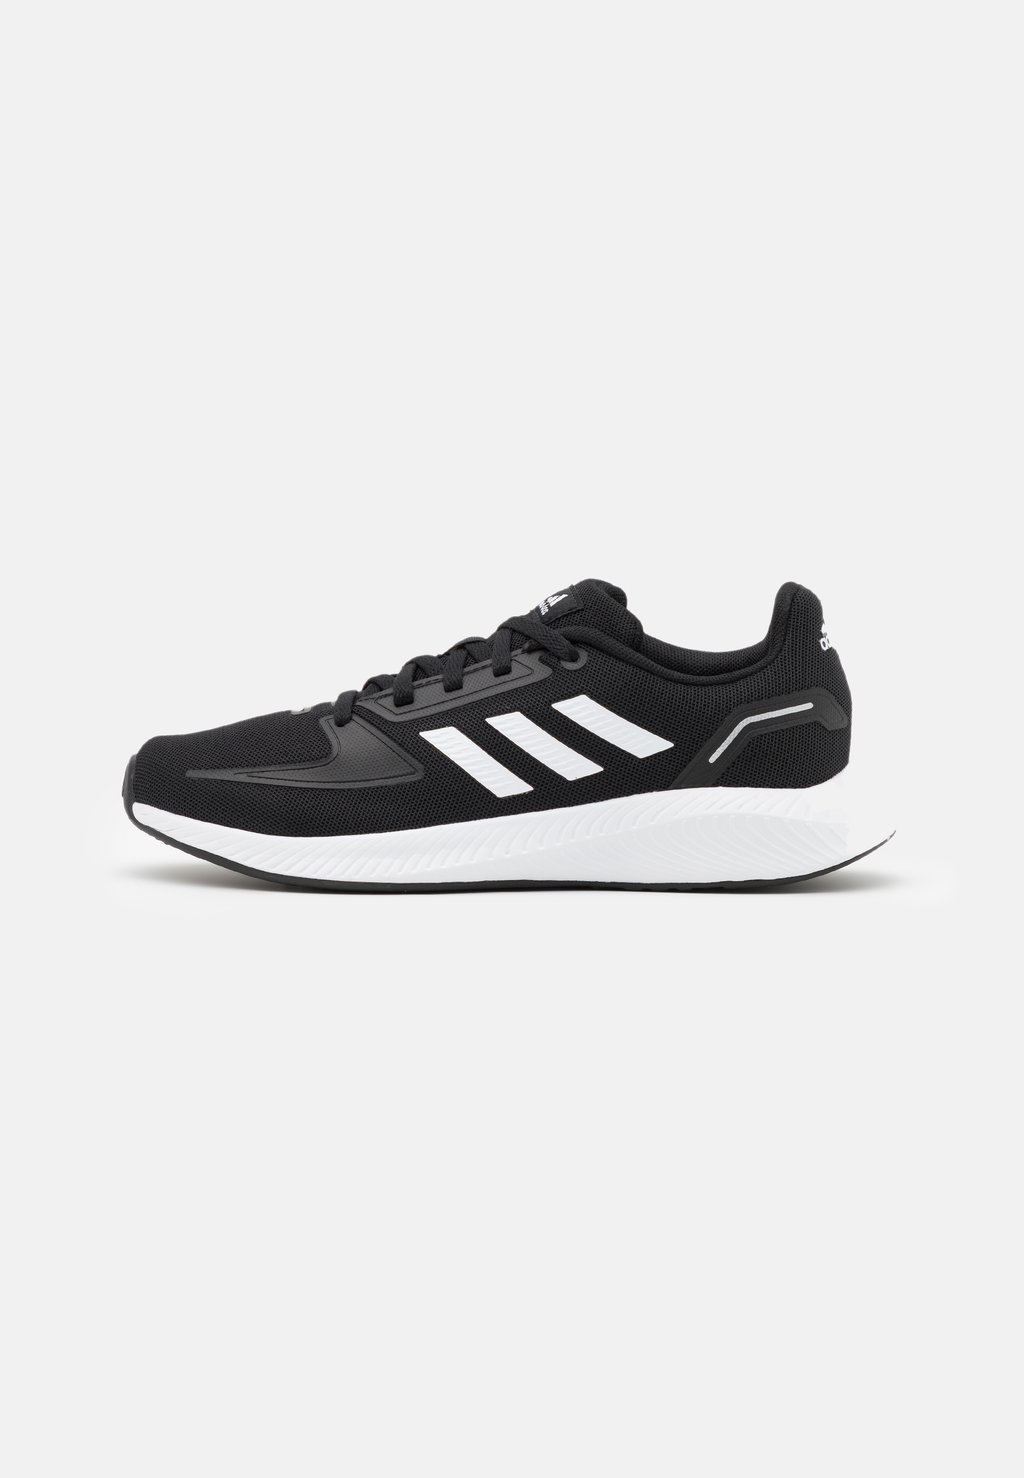 Нейтральные кроссовки Runfalcon 2.0 Unisex Adidas, цвет core black/footwear white/silver metallic